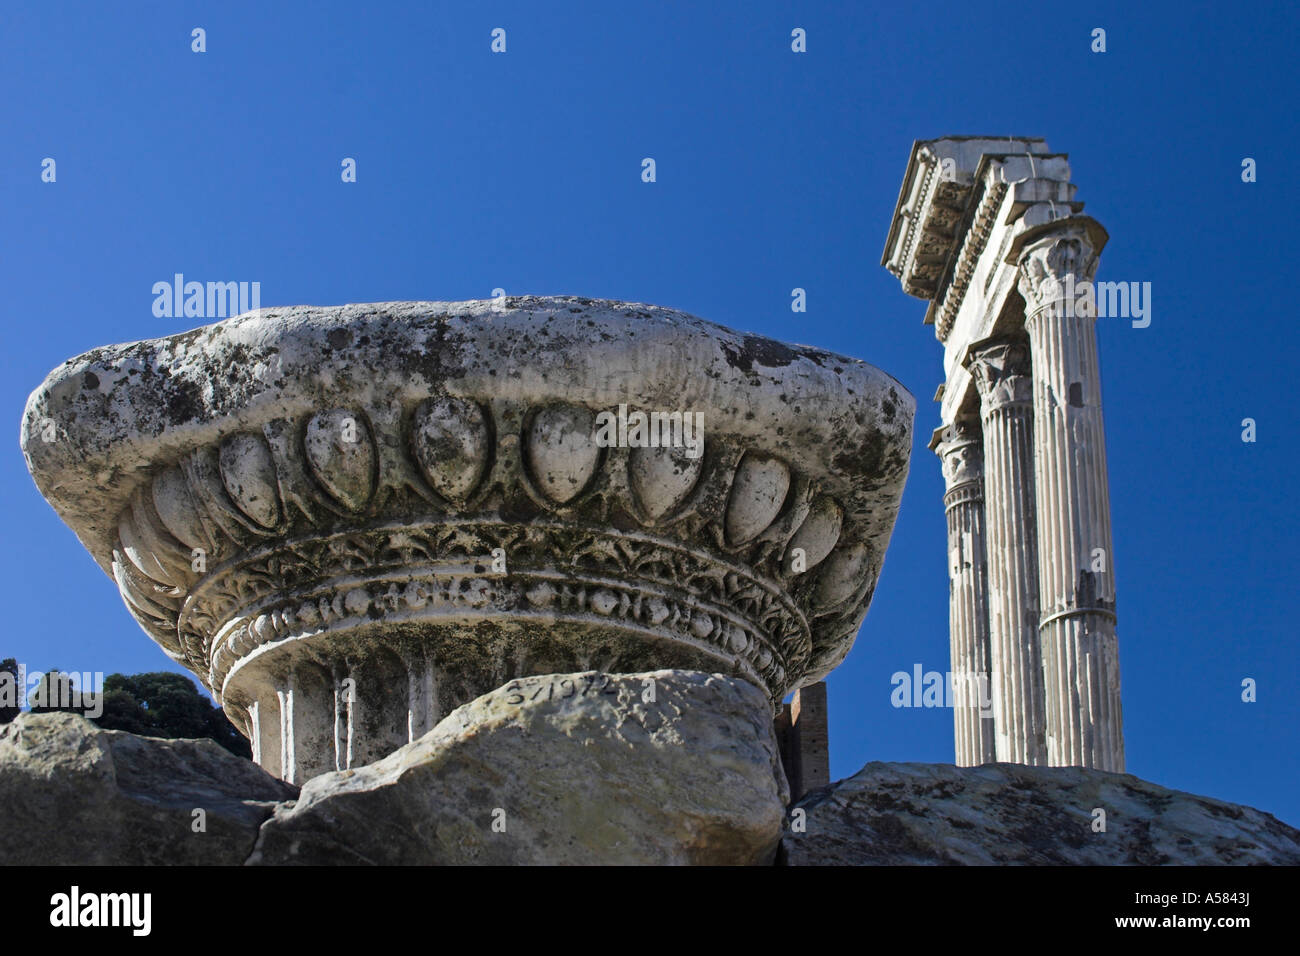 Antique columns, Foro Romano, Rome, Italy, Europe Stock Photo